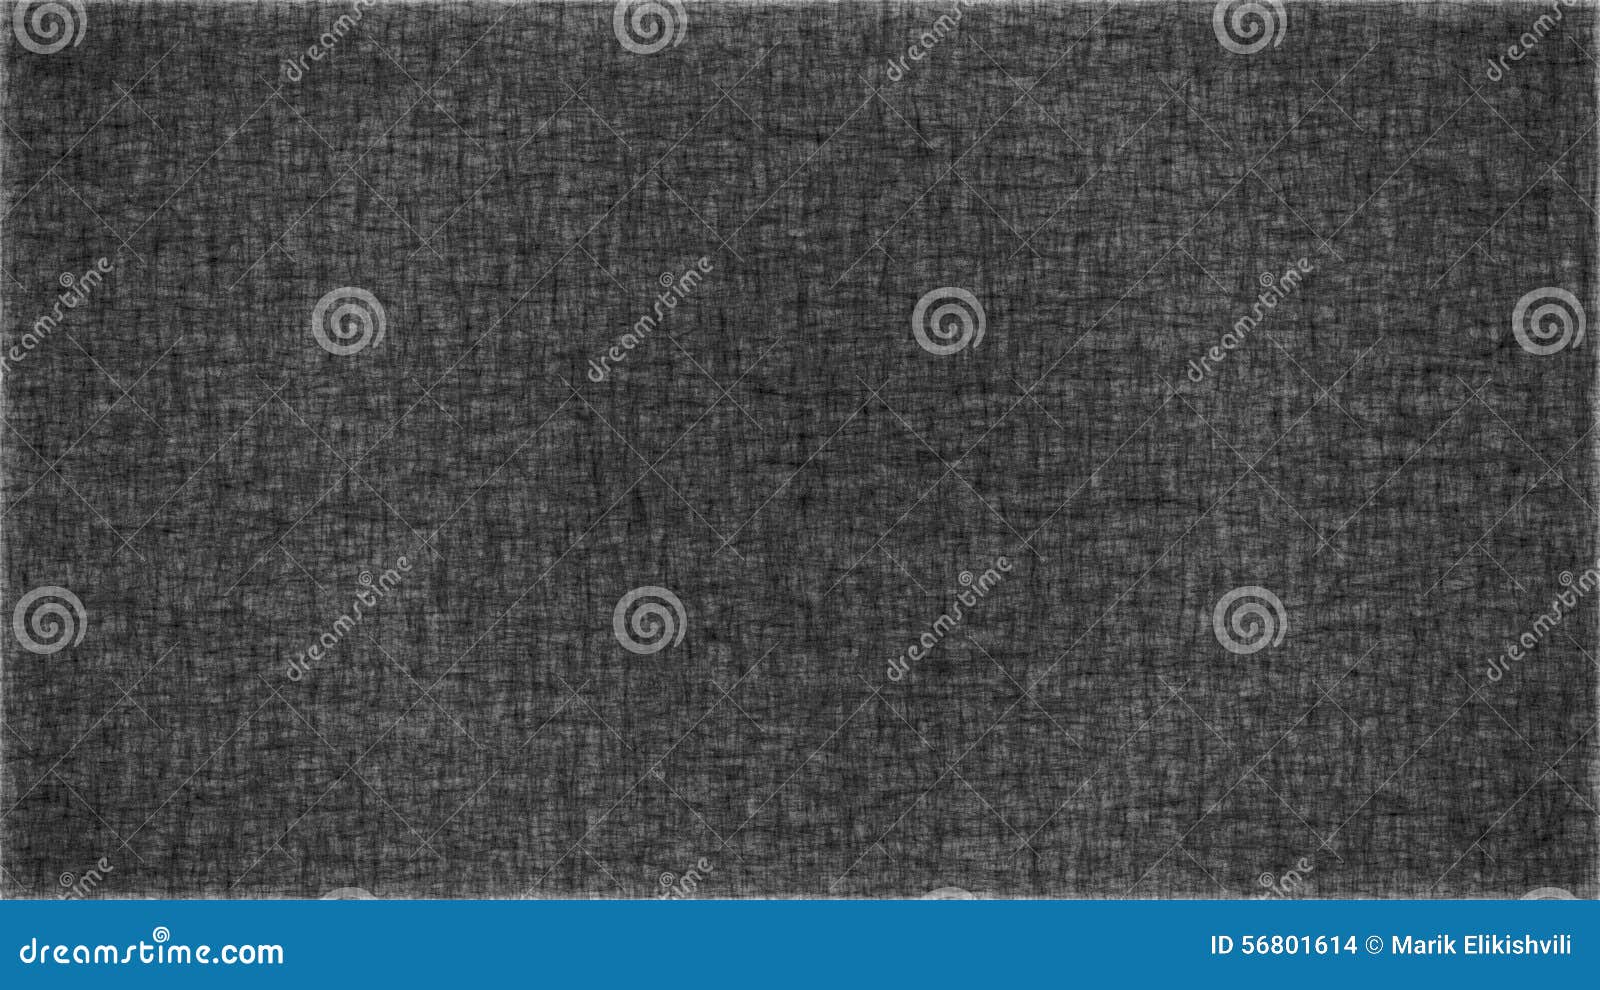 Desktop texture background stock photo. Image of black - 56801614